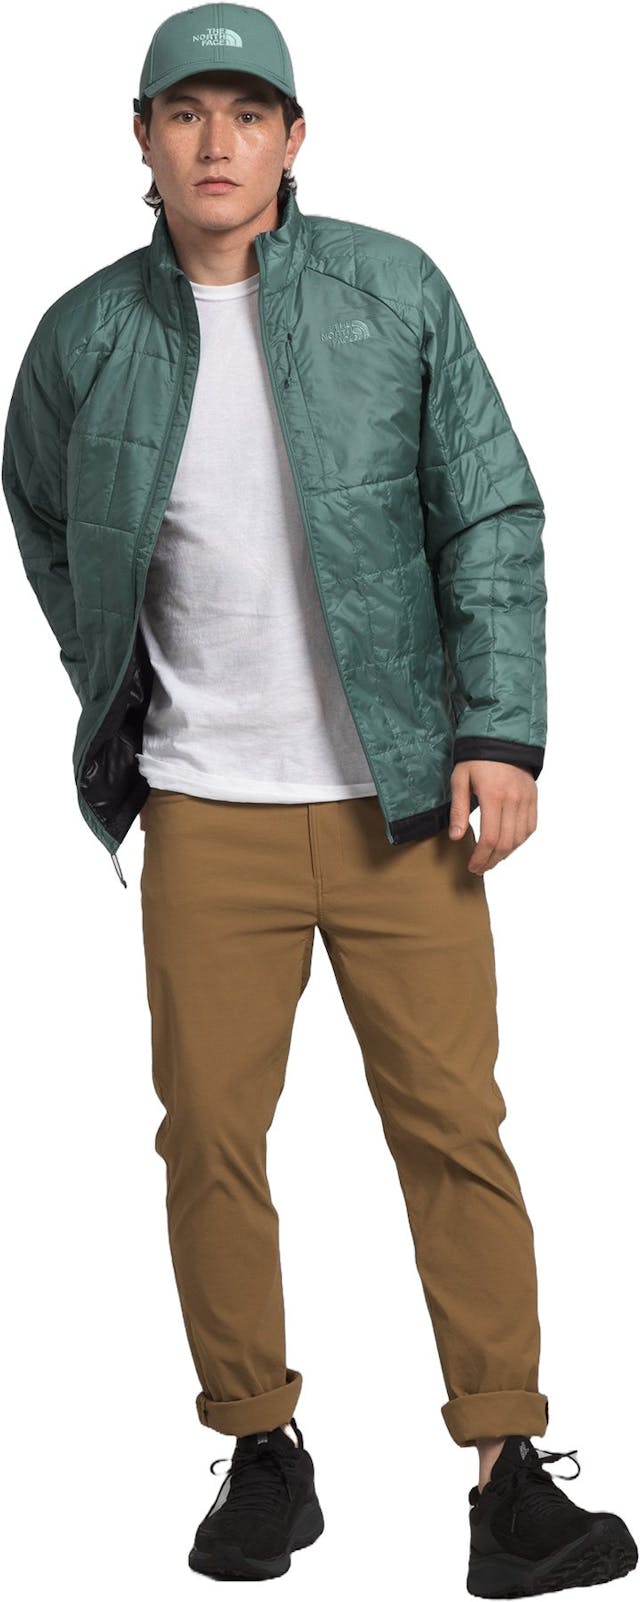 Product image for Circaloft Jacket - Men’s